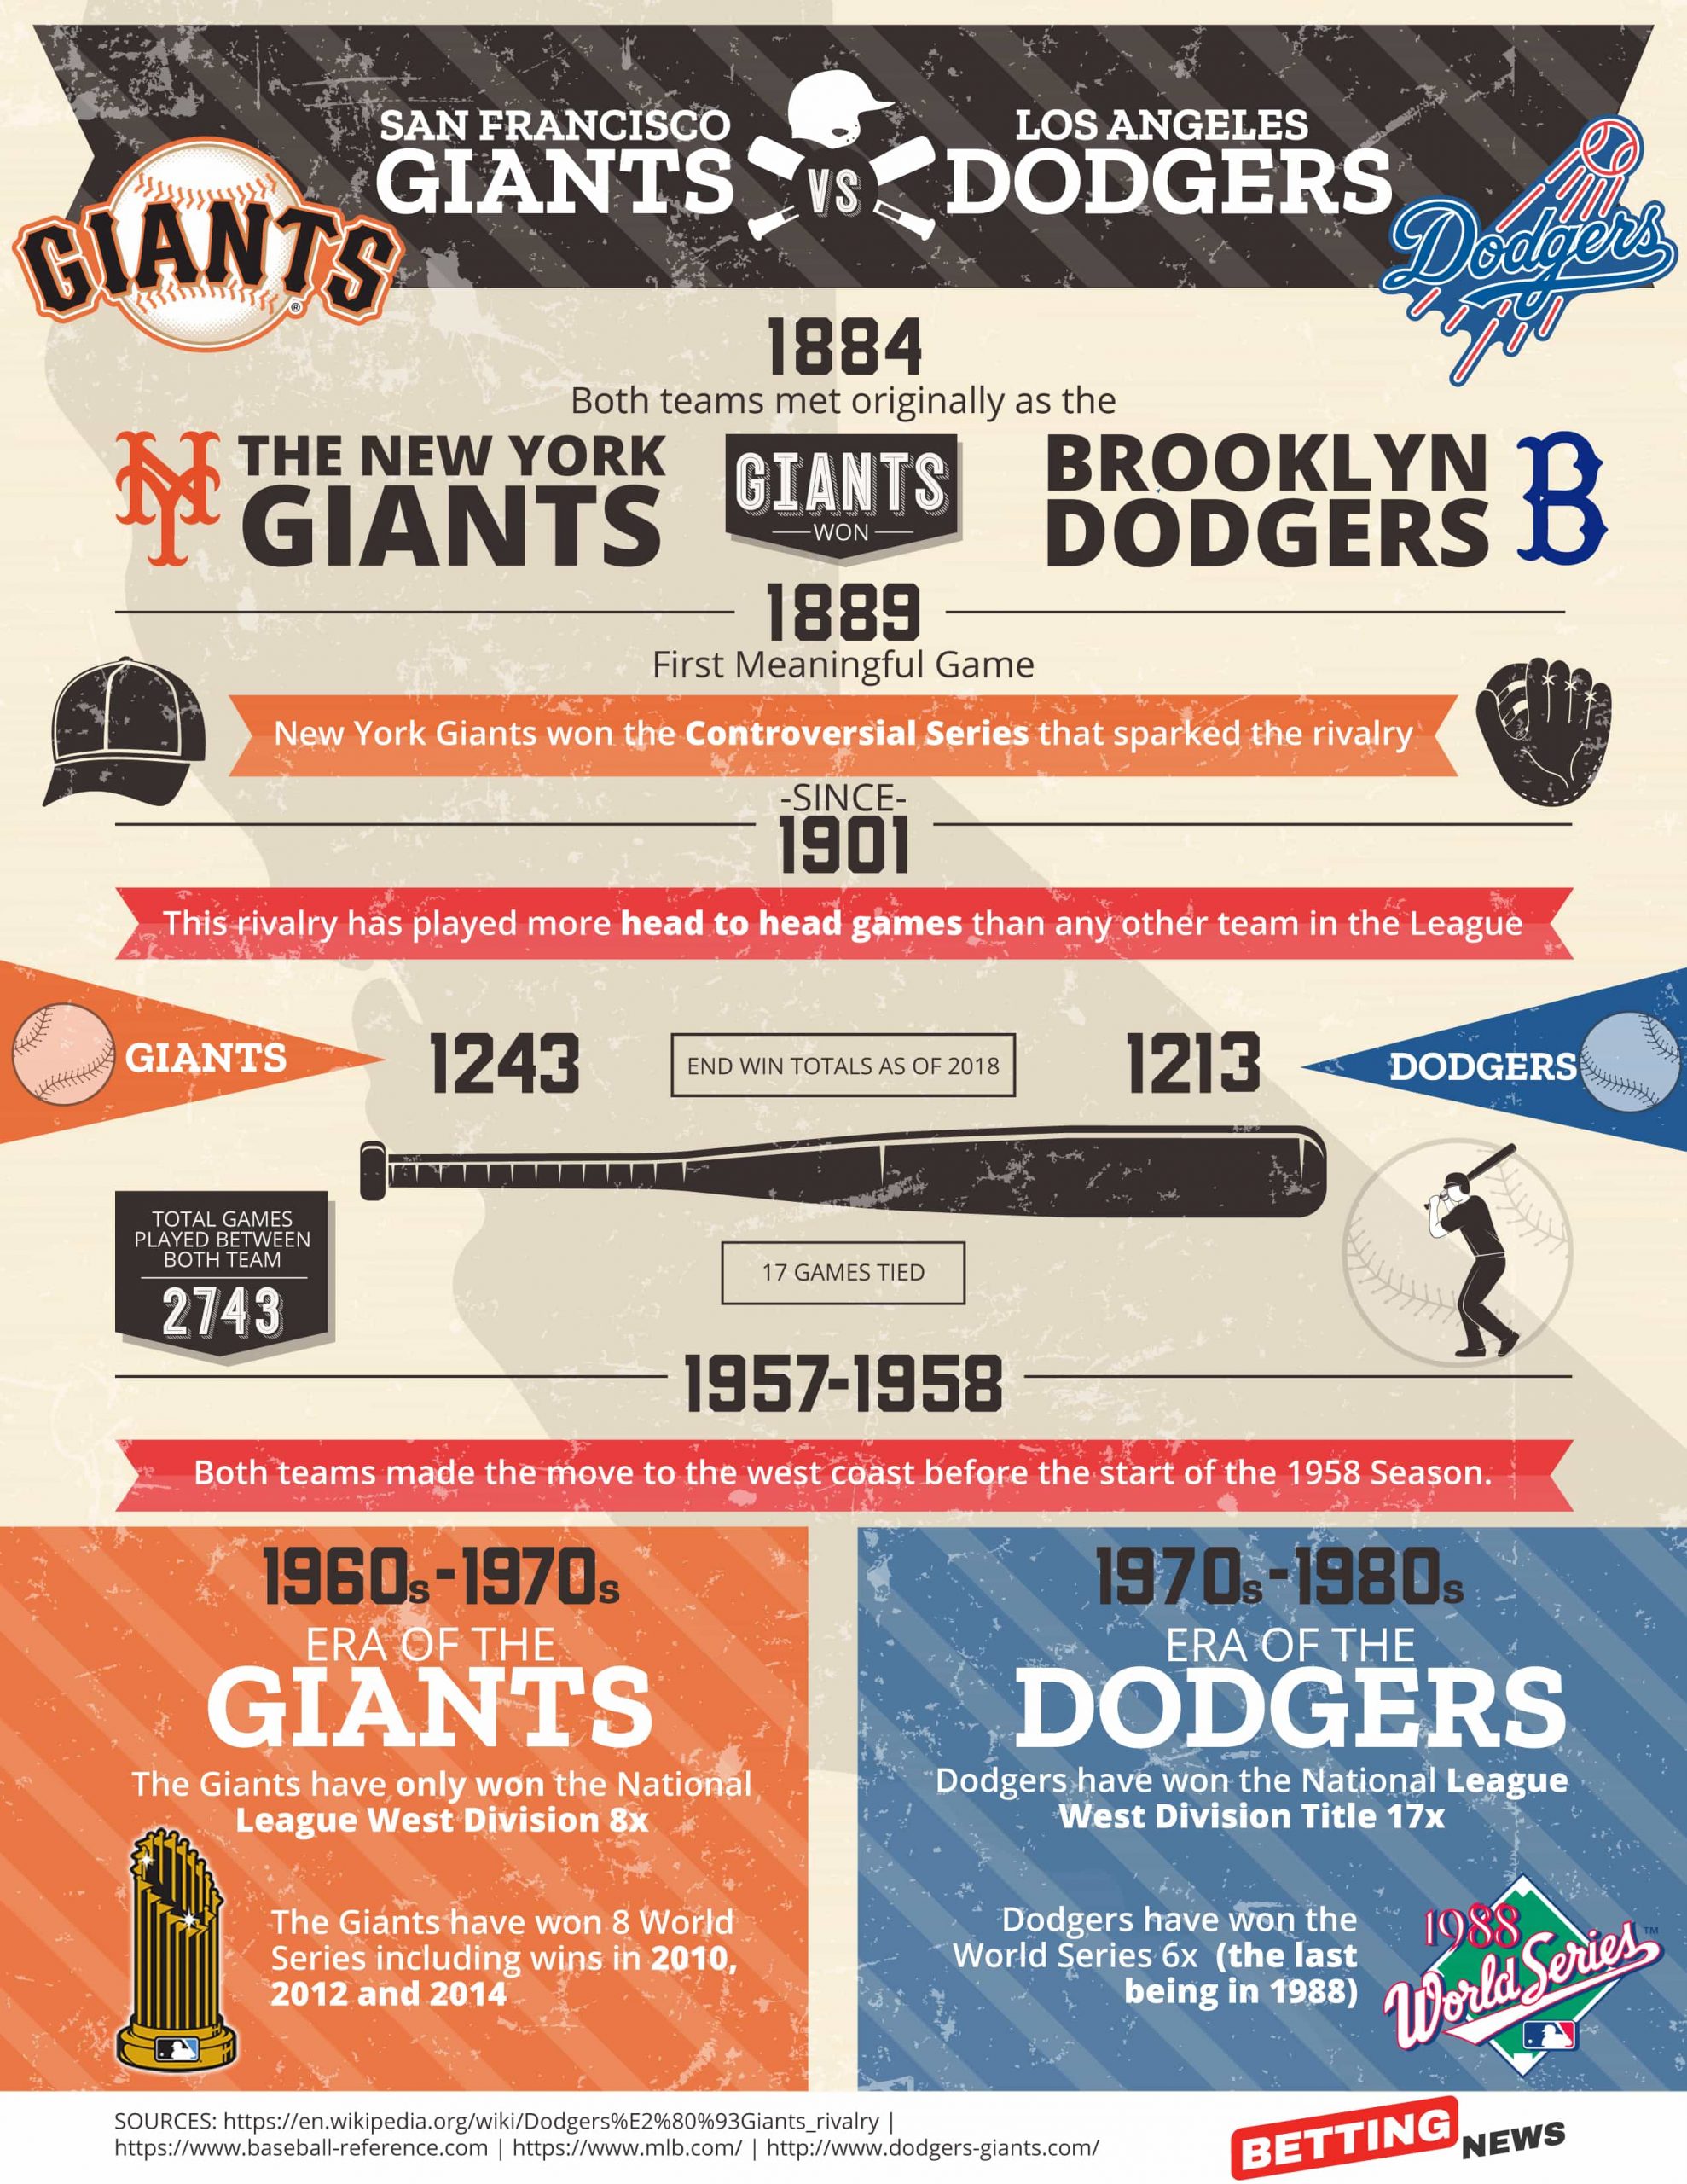 San Francisco Giants vs Los Angeles Dodgers